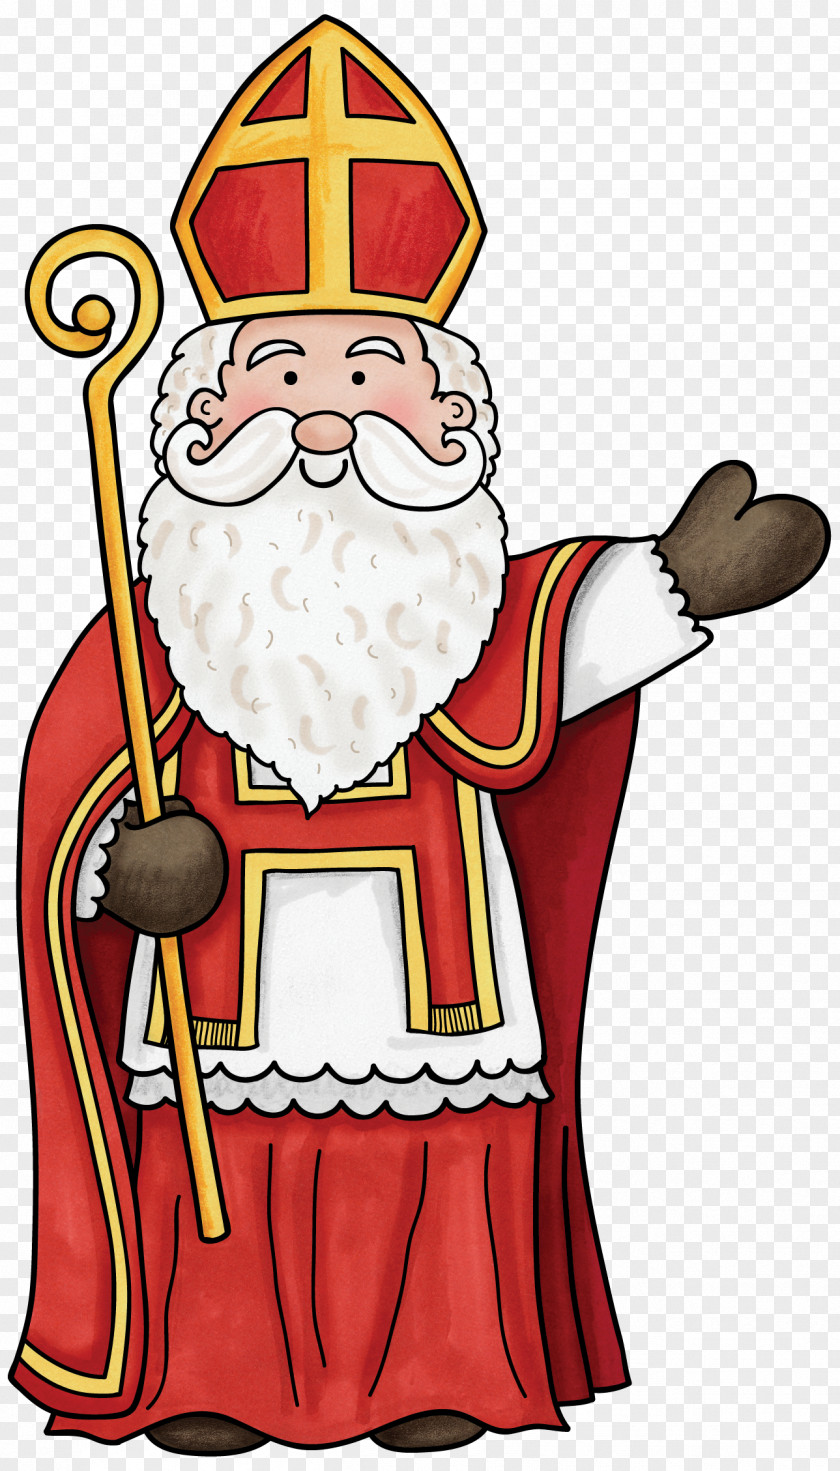 Santa Claus Ded Moroz Christmas Ornament Day Sinterklaas PNG